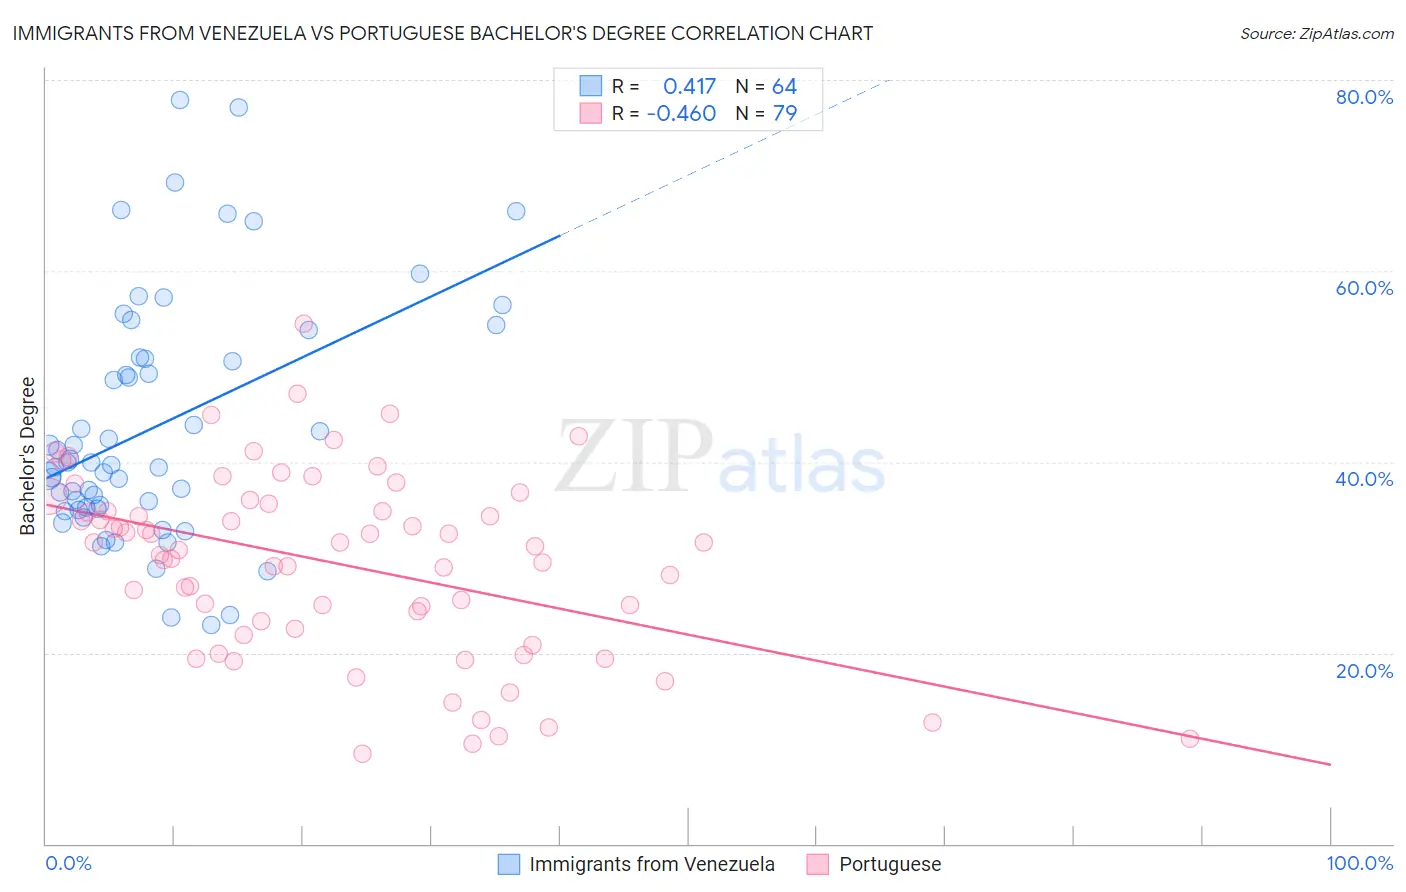 Immigrants from Venezuela vs Portuguese Bachelor's Degree